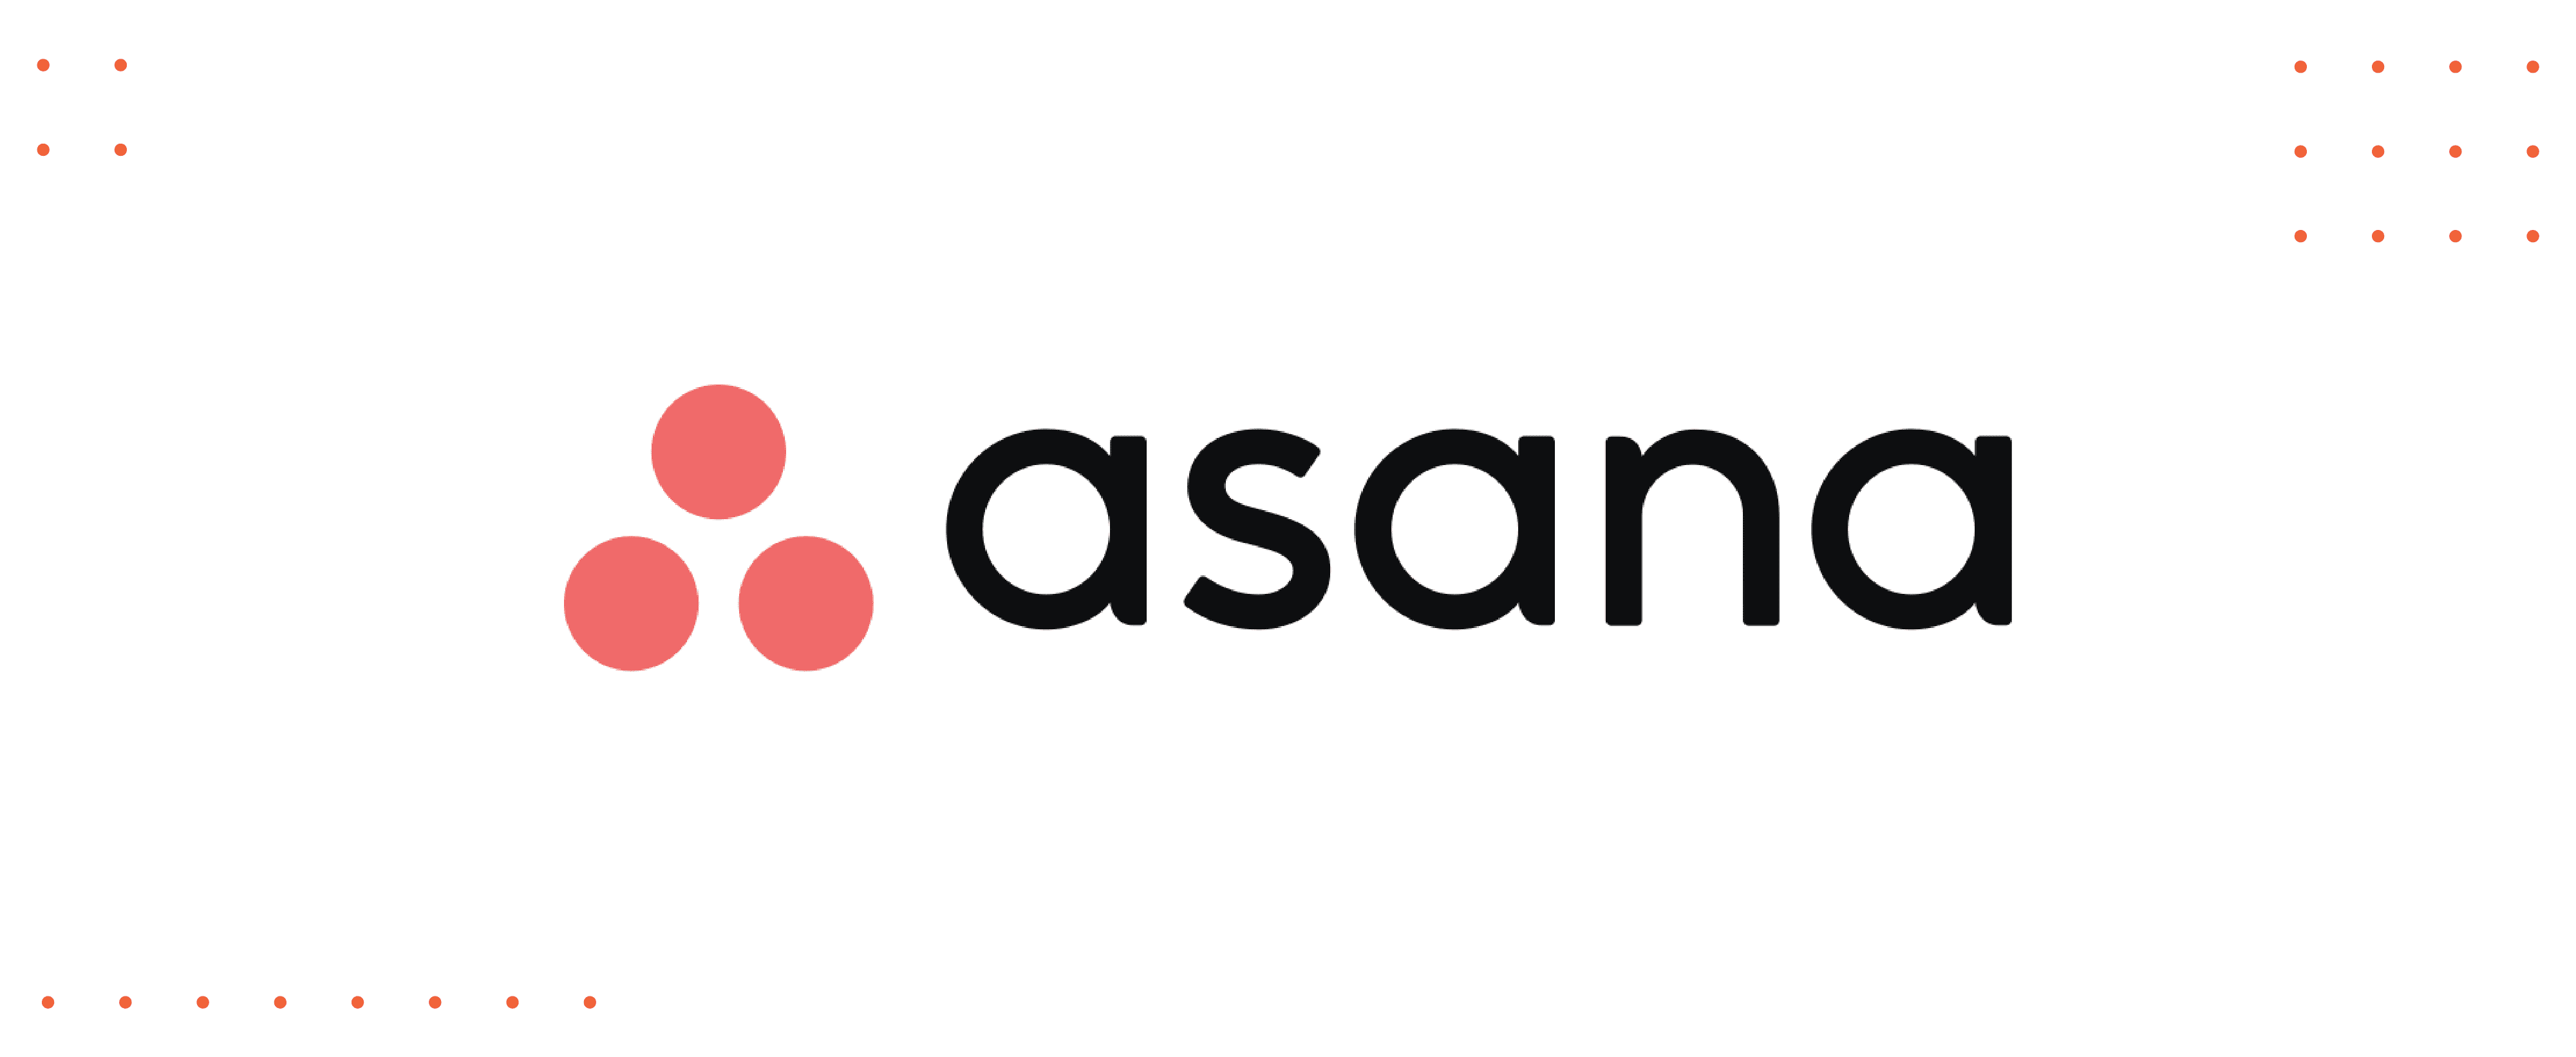 Asana icon